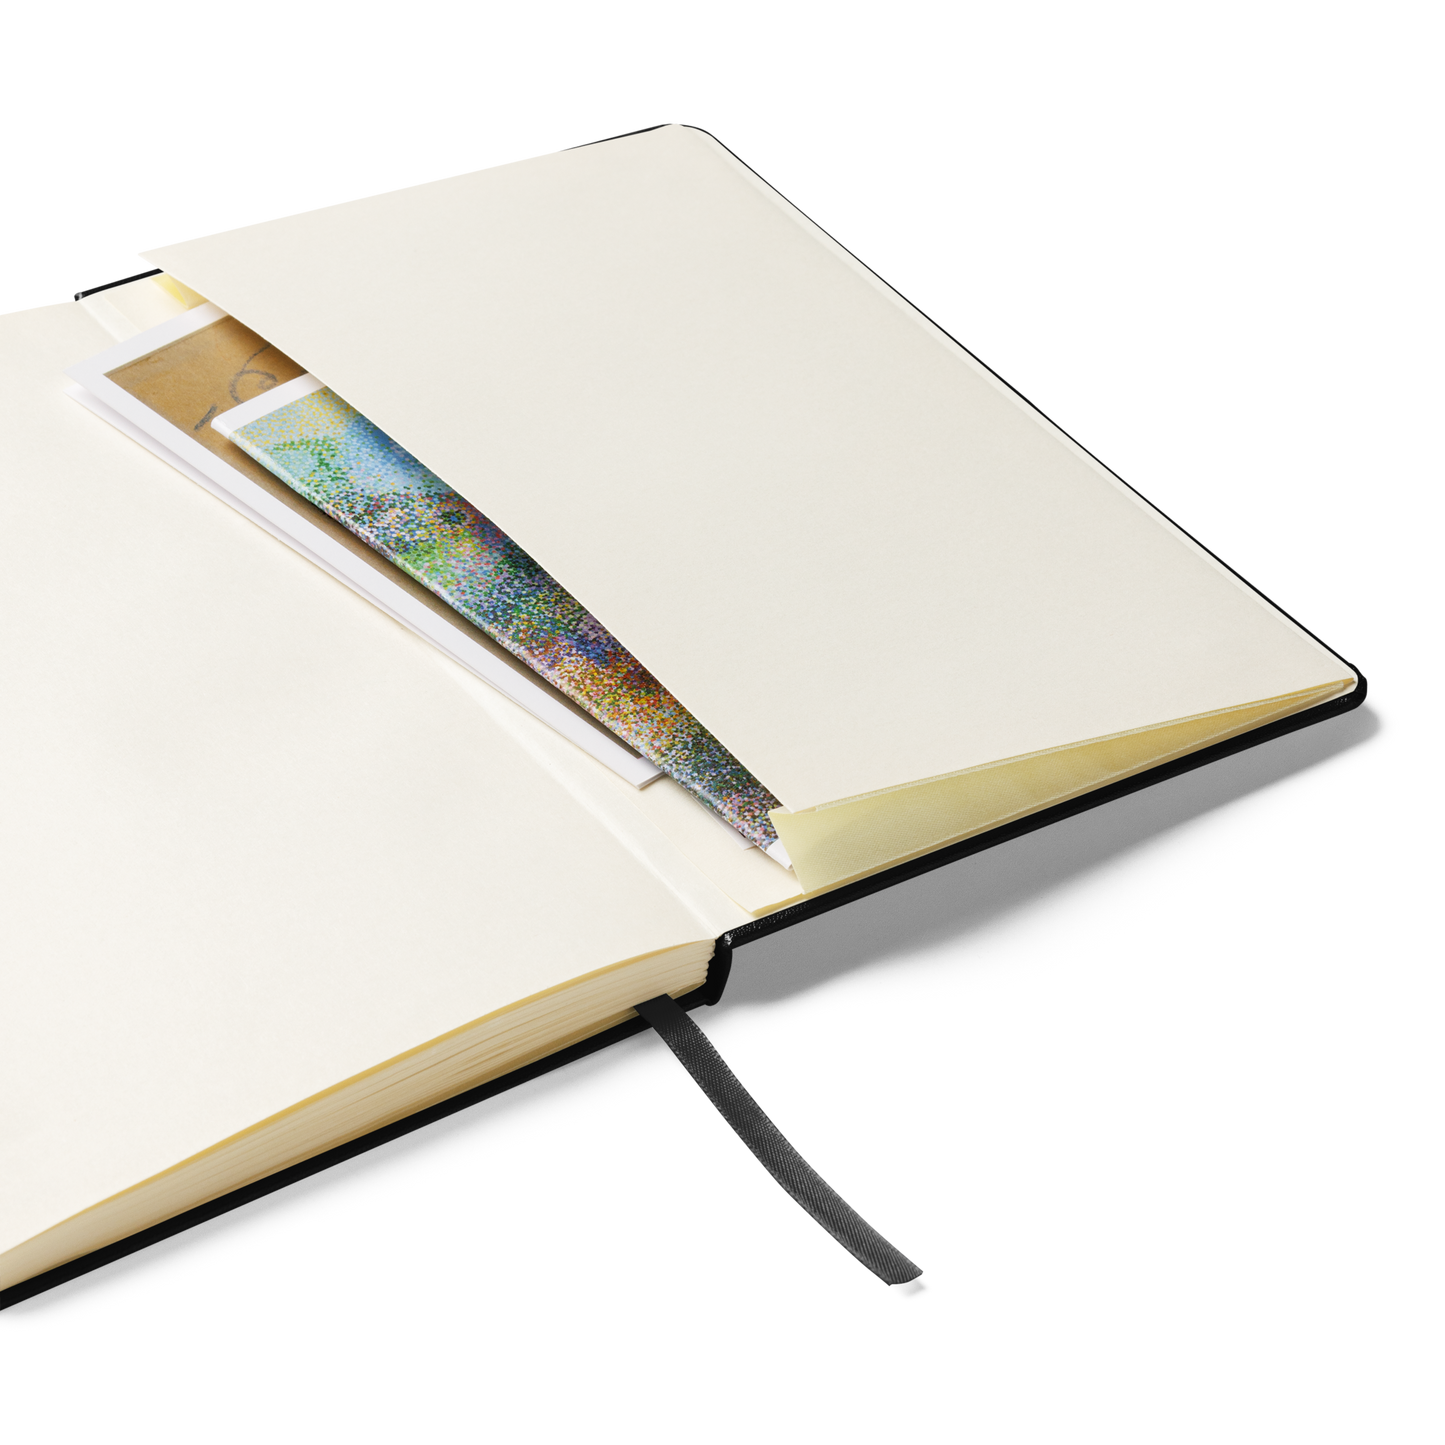 Inner Fokus Logo Hardcover bound notebook/journal